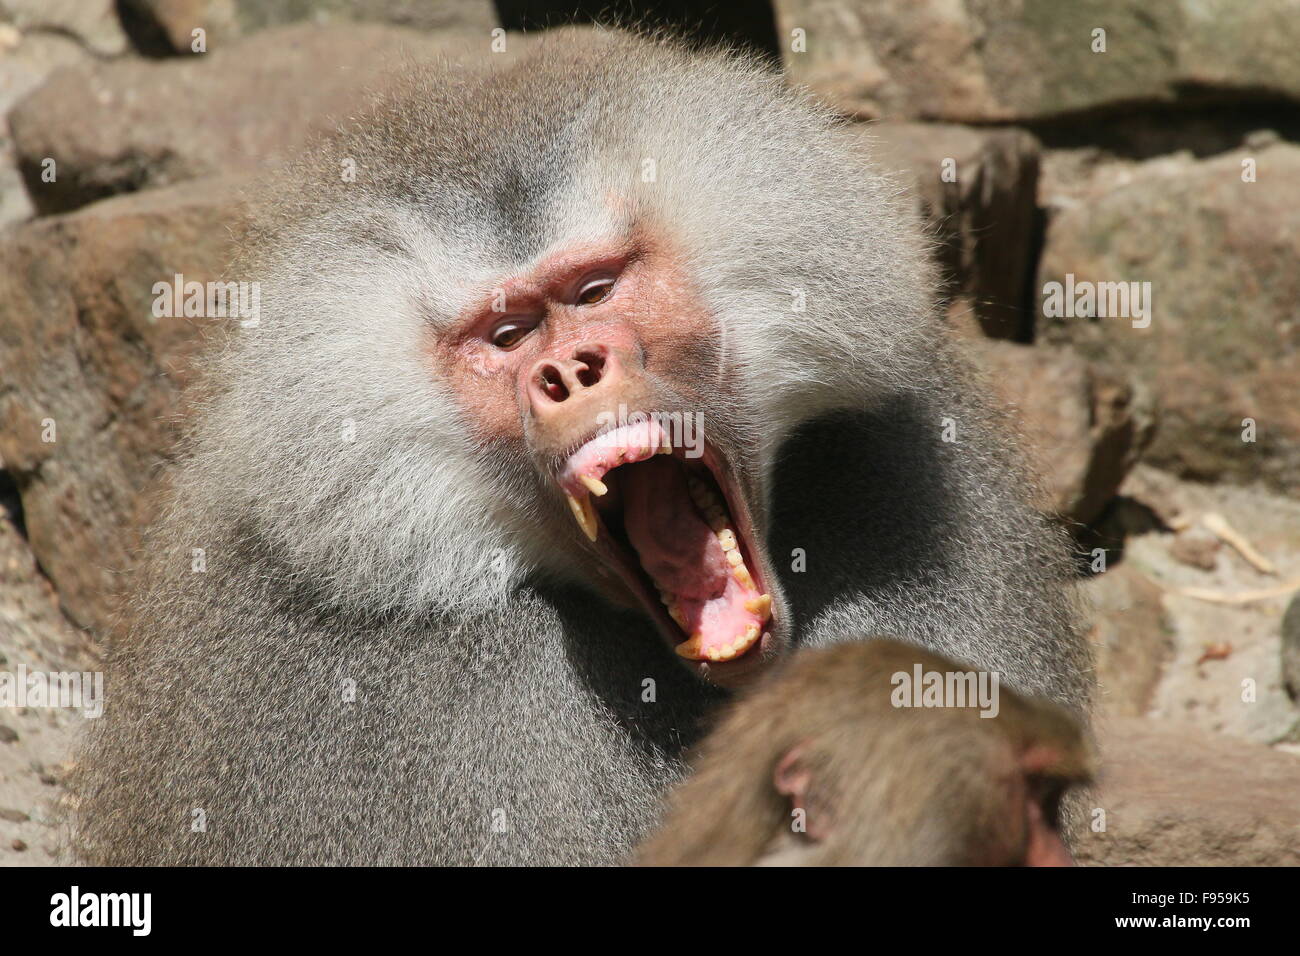 Maschio aggressivo African Hamadryas baboon (Papio hamadryas) ringhiando, la bocca spalancata, denti bared Foto Stock